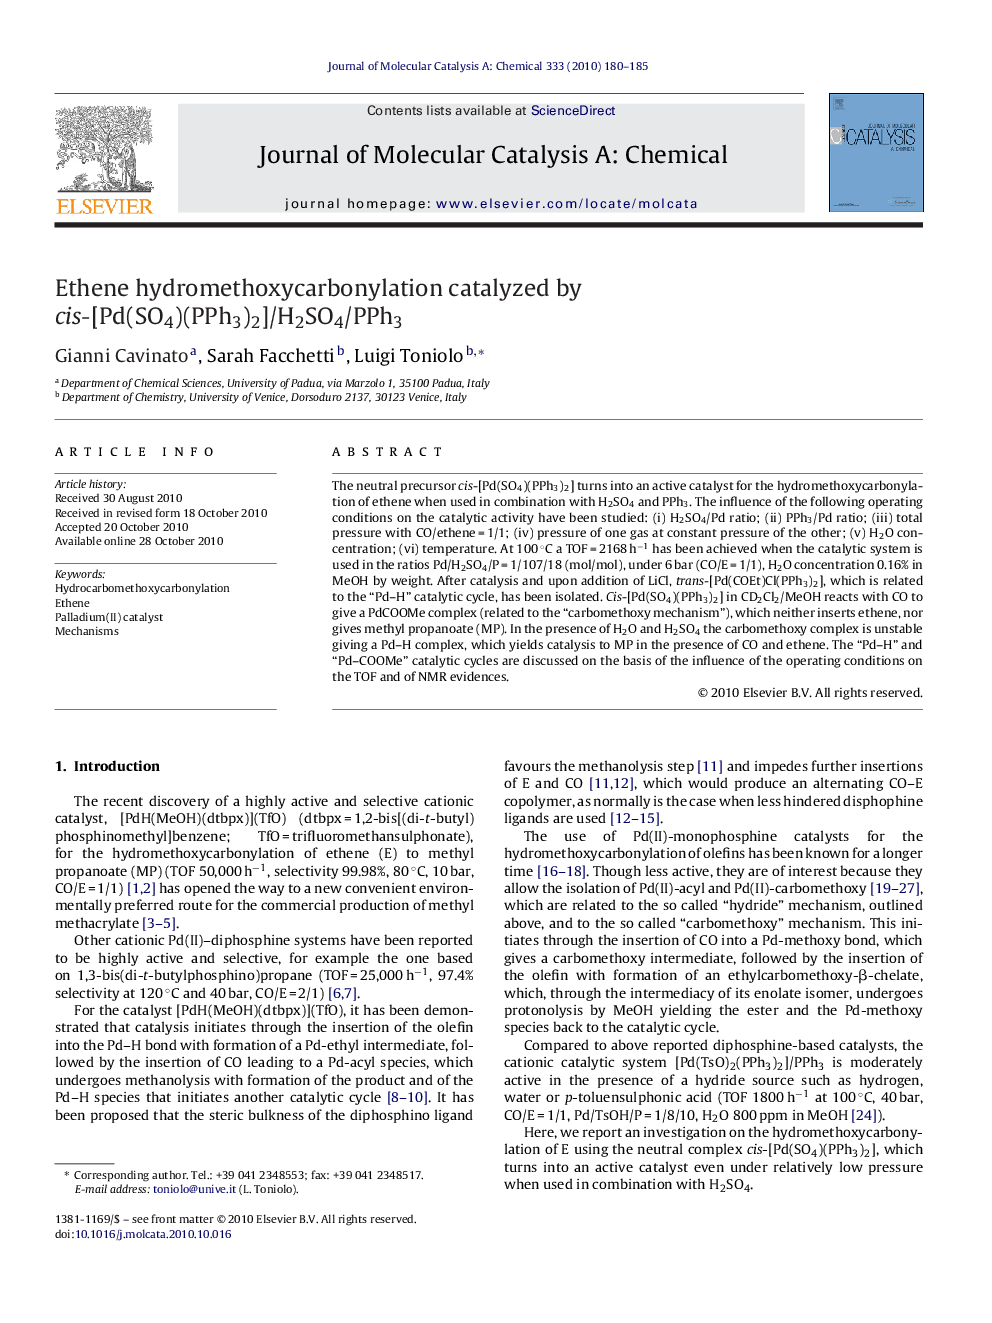 Ethene hydromethoxycarbonylation catalyzed by cis-[Pd(SO4)(PPh3)2]/H2SO4/PPh3